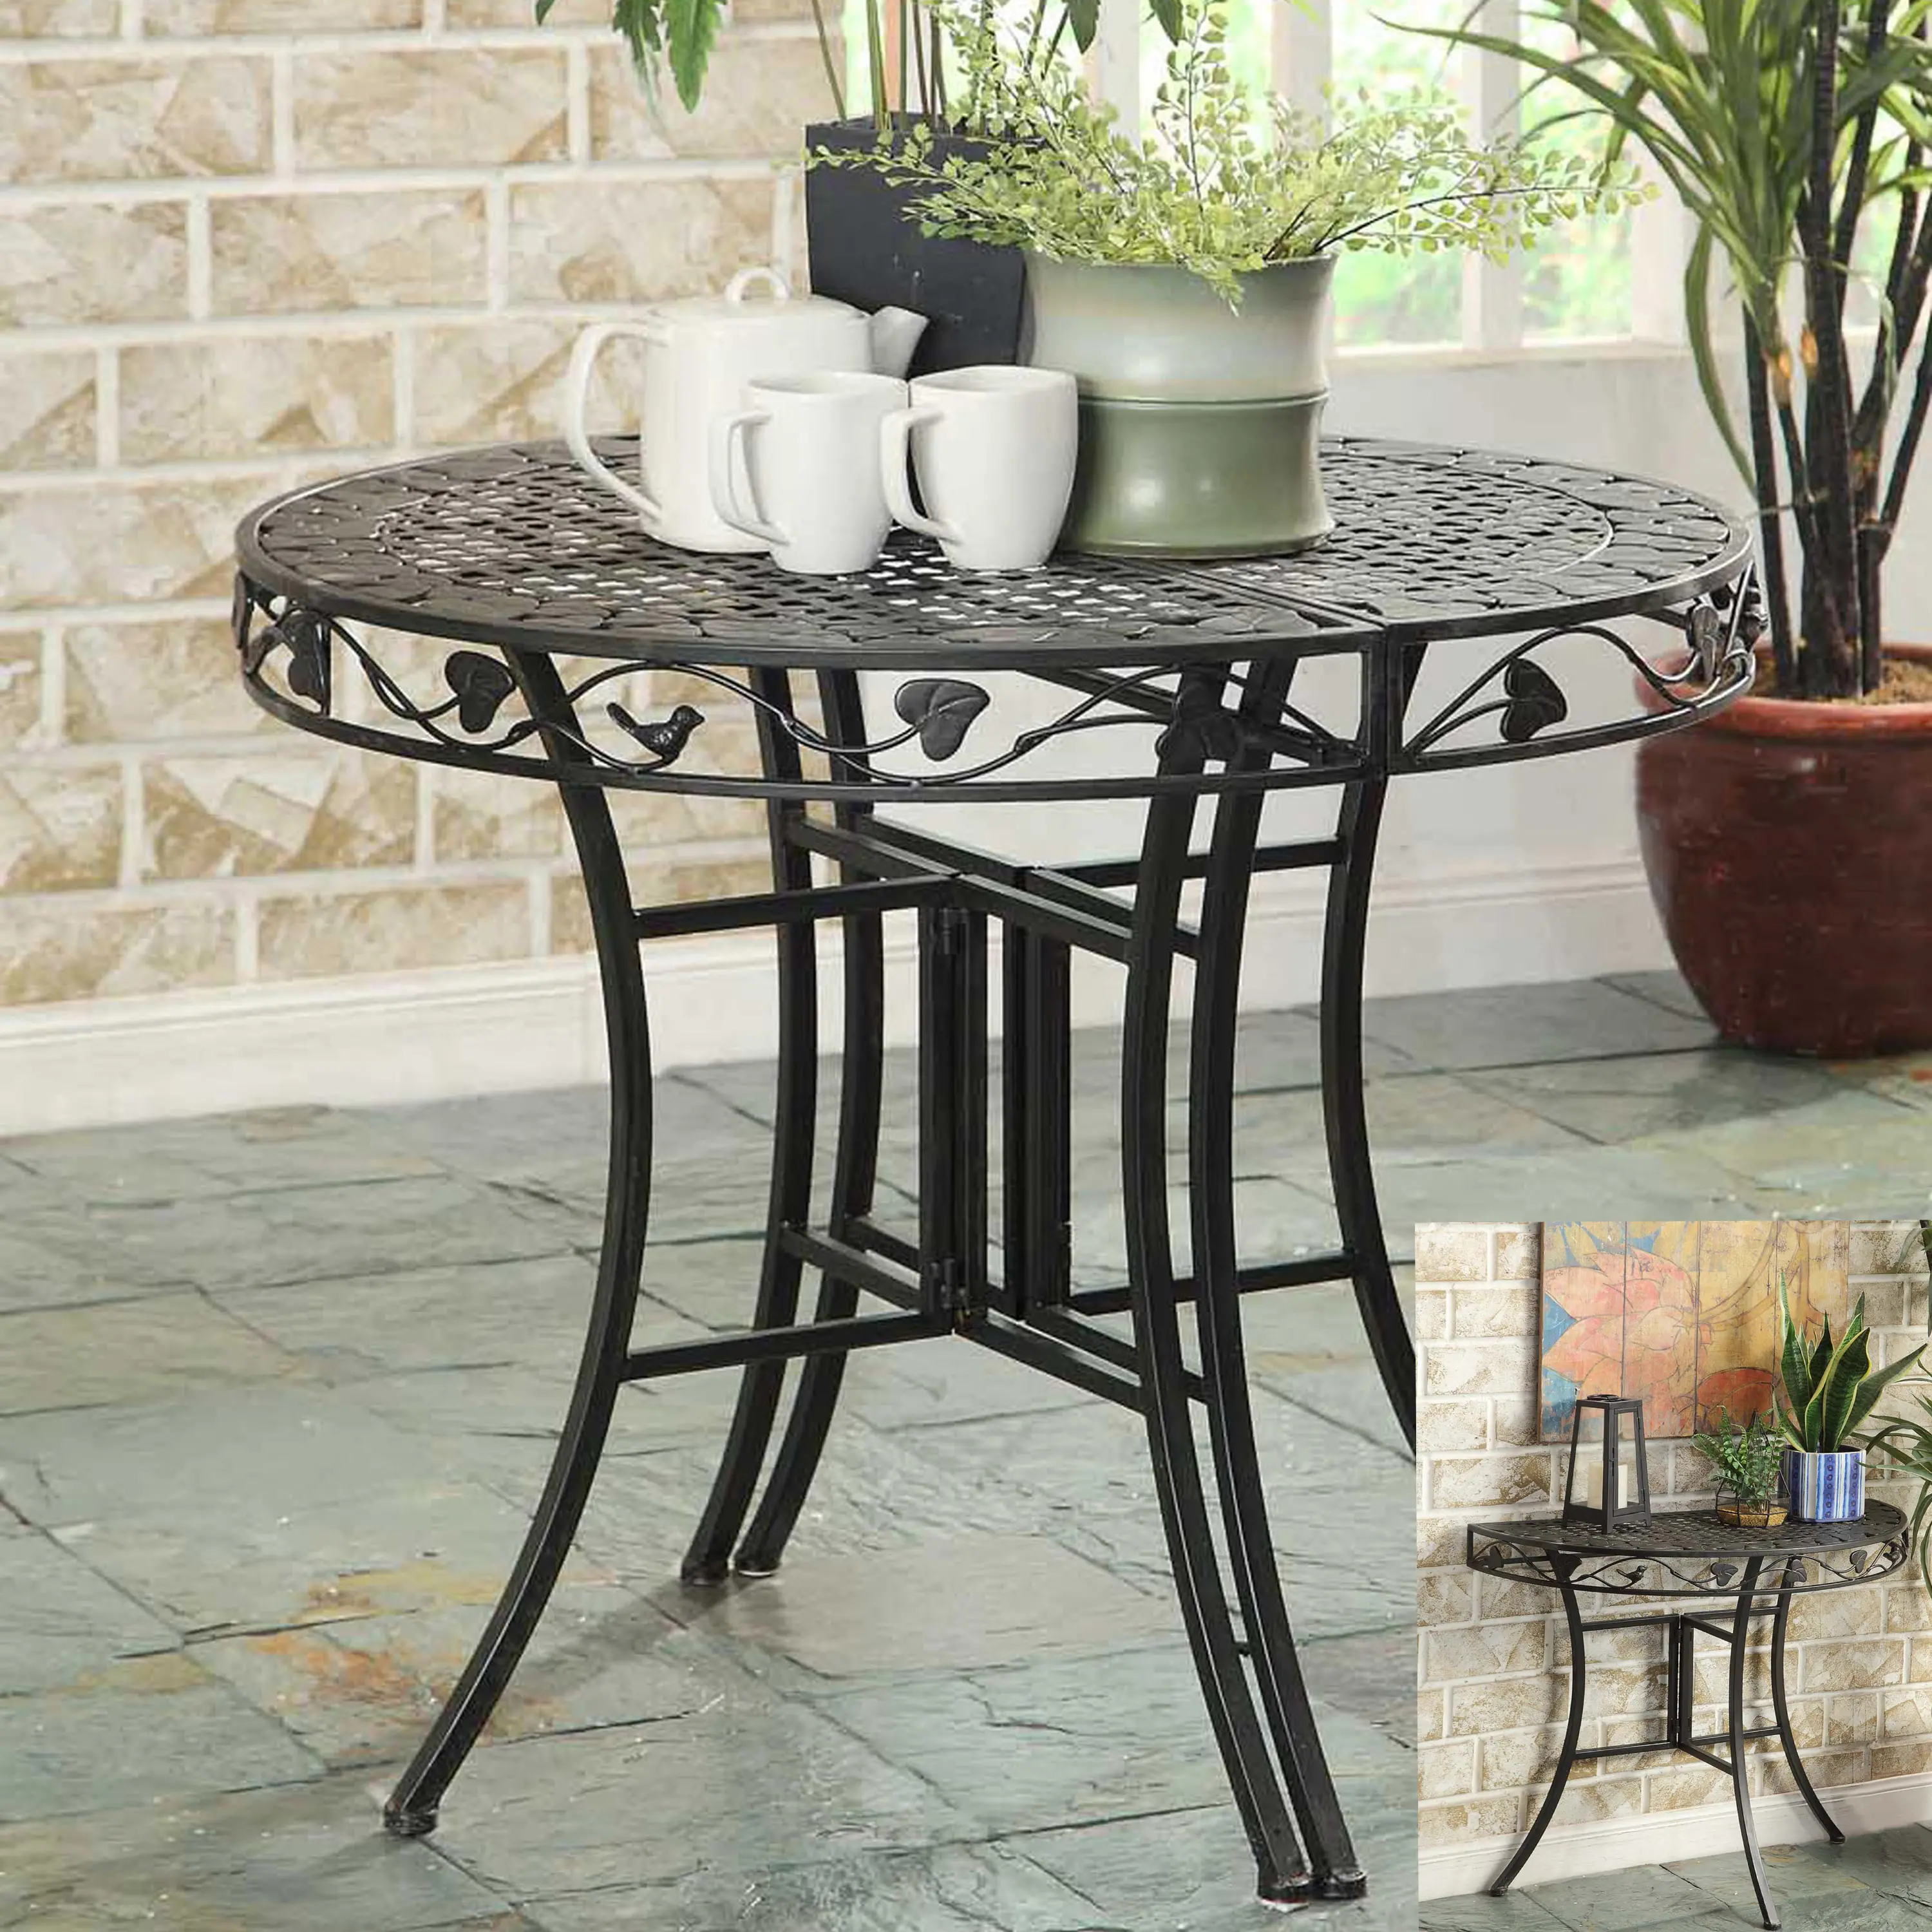 Photos - Garden Furniture 4D Concepts Outdoor Multi-Use Round Table Halves - Ivy League 123780